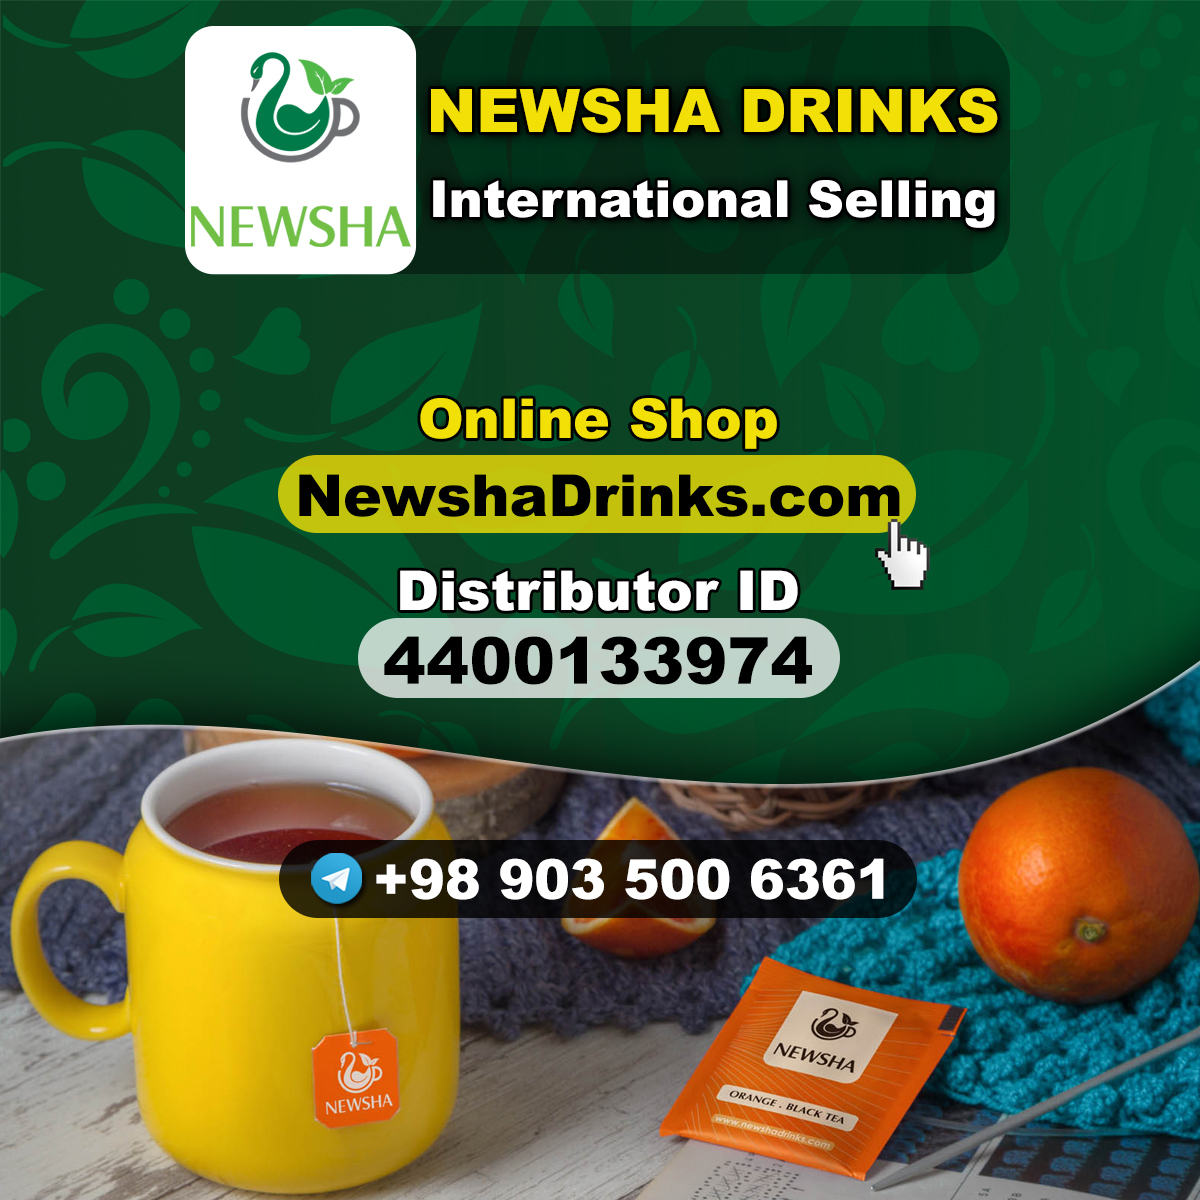 Newsha Drinks International Selling